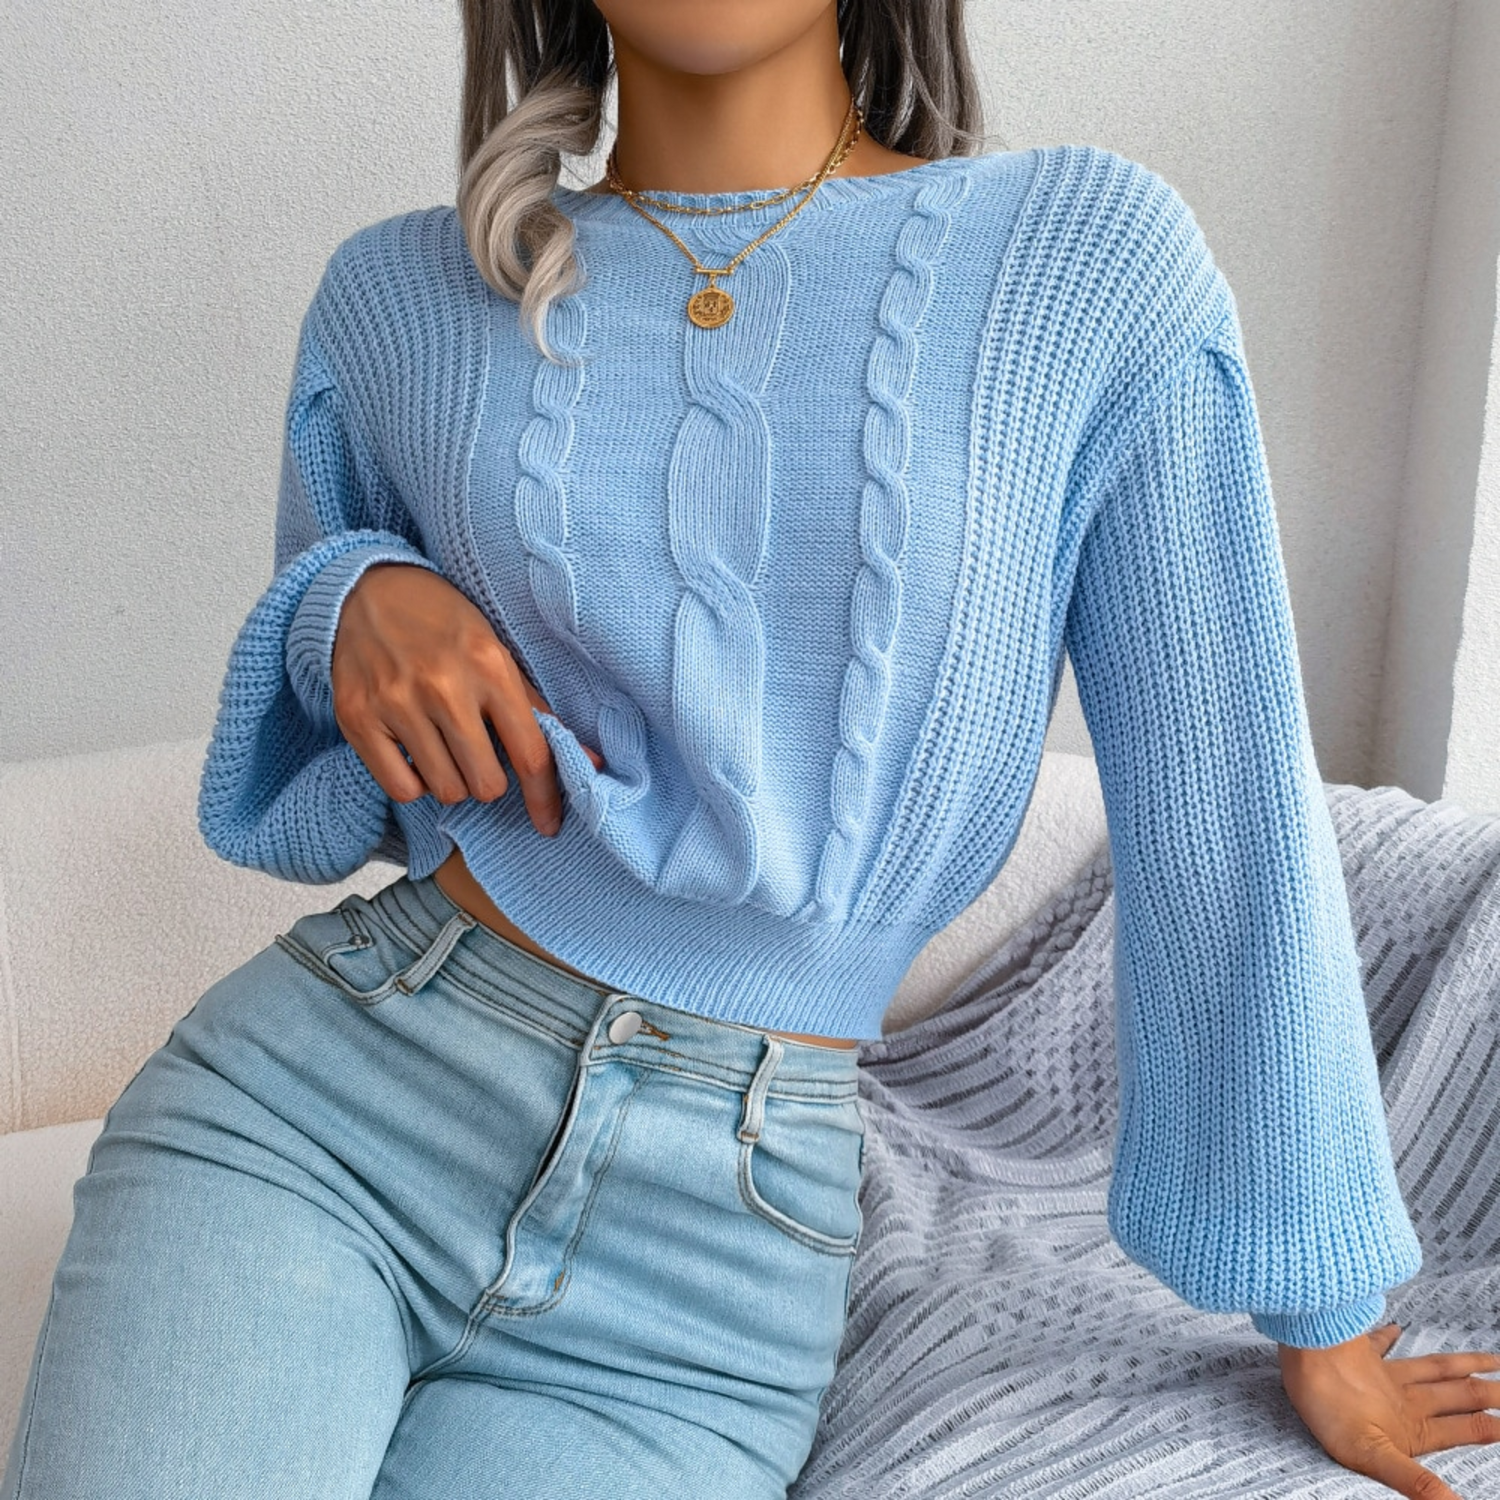 Ryder - Blue Braided Knit Top - Model Mannequin